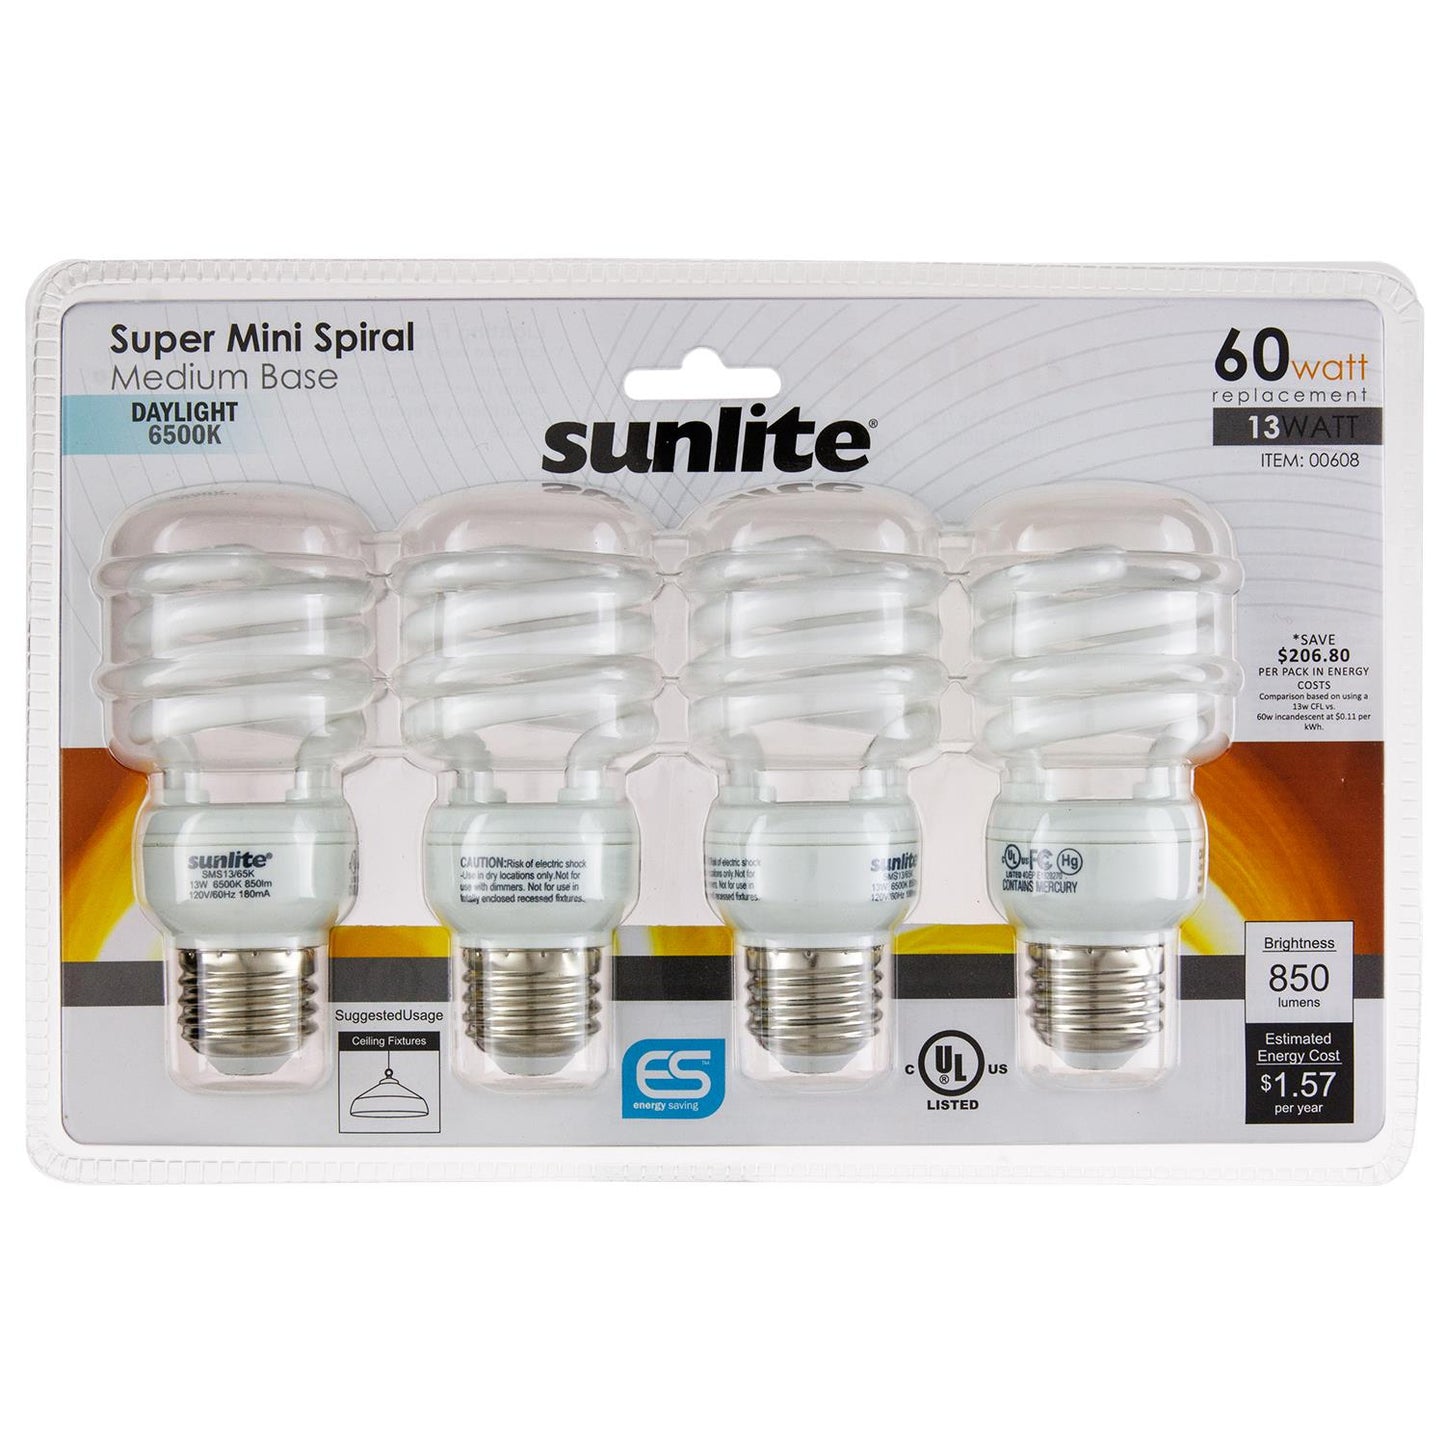 Sunlite 13 Watt Super Mini Spiral, Medium Base, Daylight